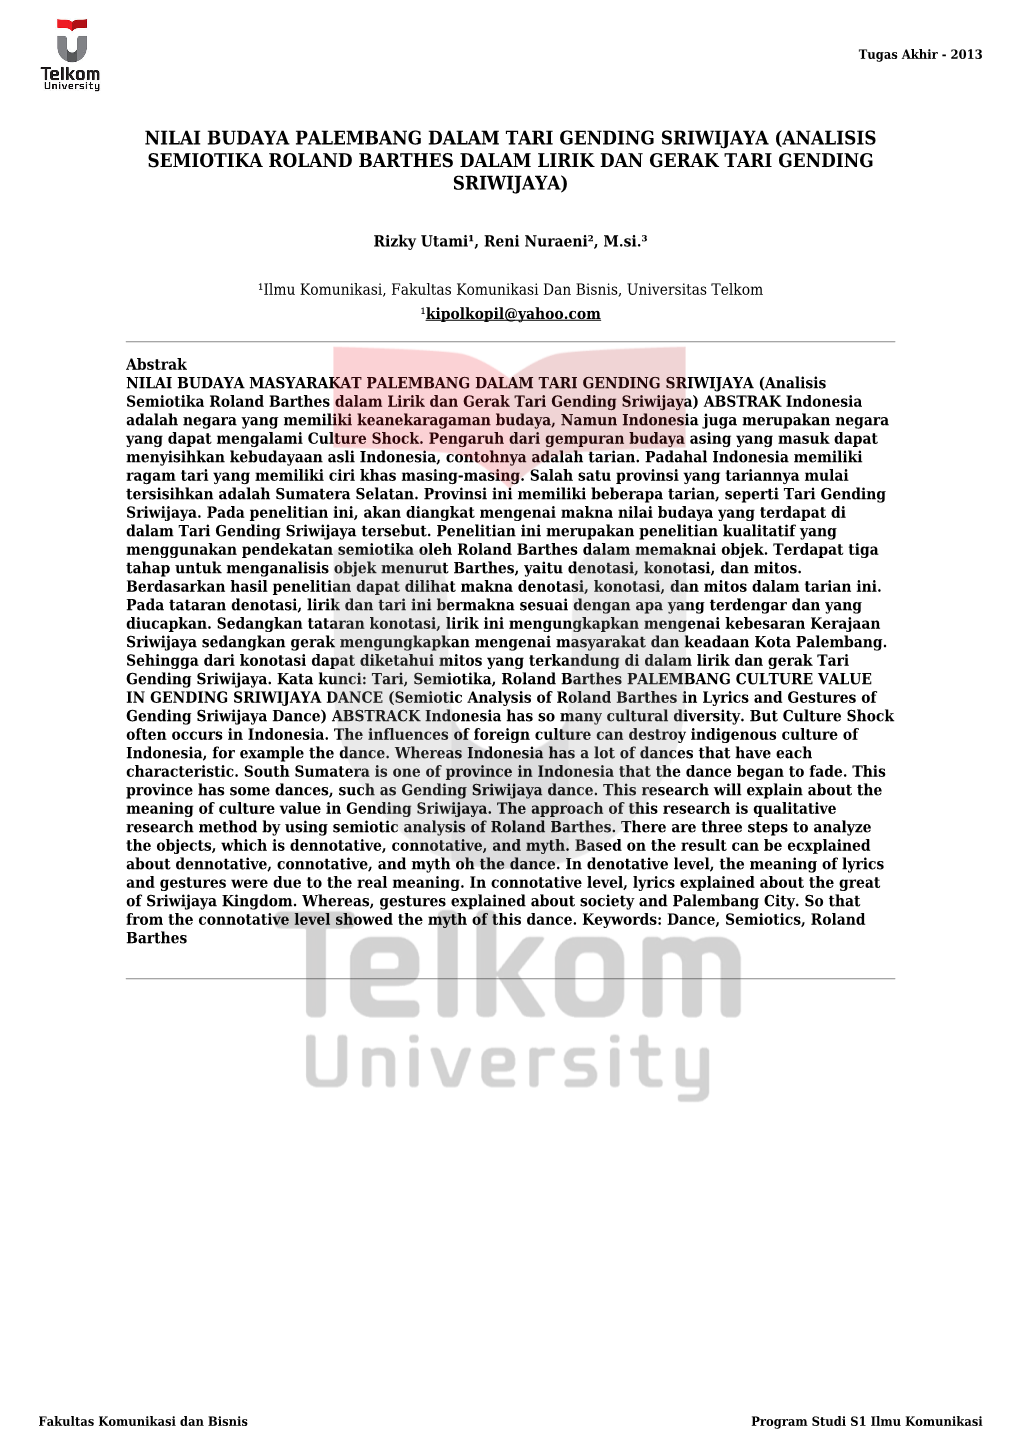 Nilai Budaya Palembang Dalam Tari Gending Sriwijaya (Analisis Semiotika Roland Barthes Dalam Lirik Dan Gerak Tari Gending Sriwijaya)